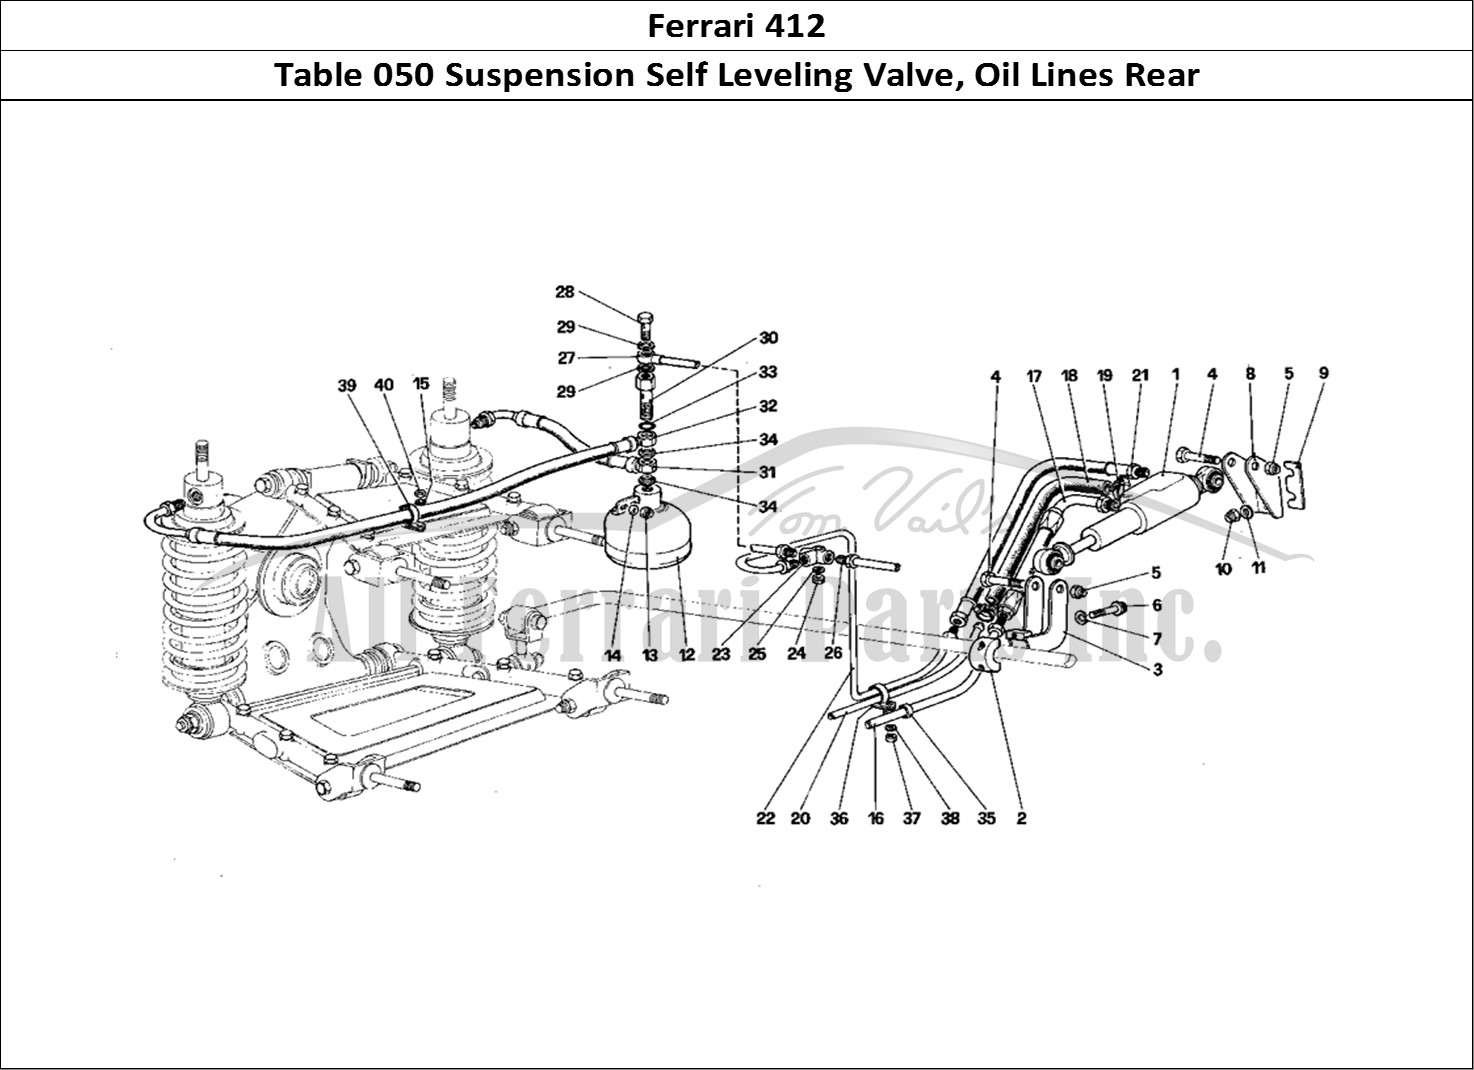 Ferrari Parts Ferrari 412 (Mechanical) Page 050 Rear Suspension - Self -